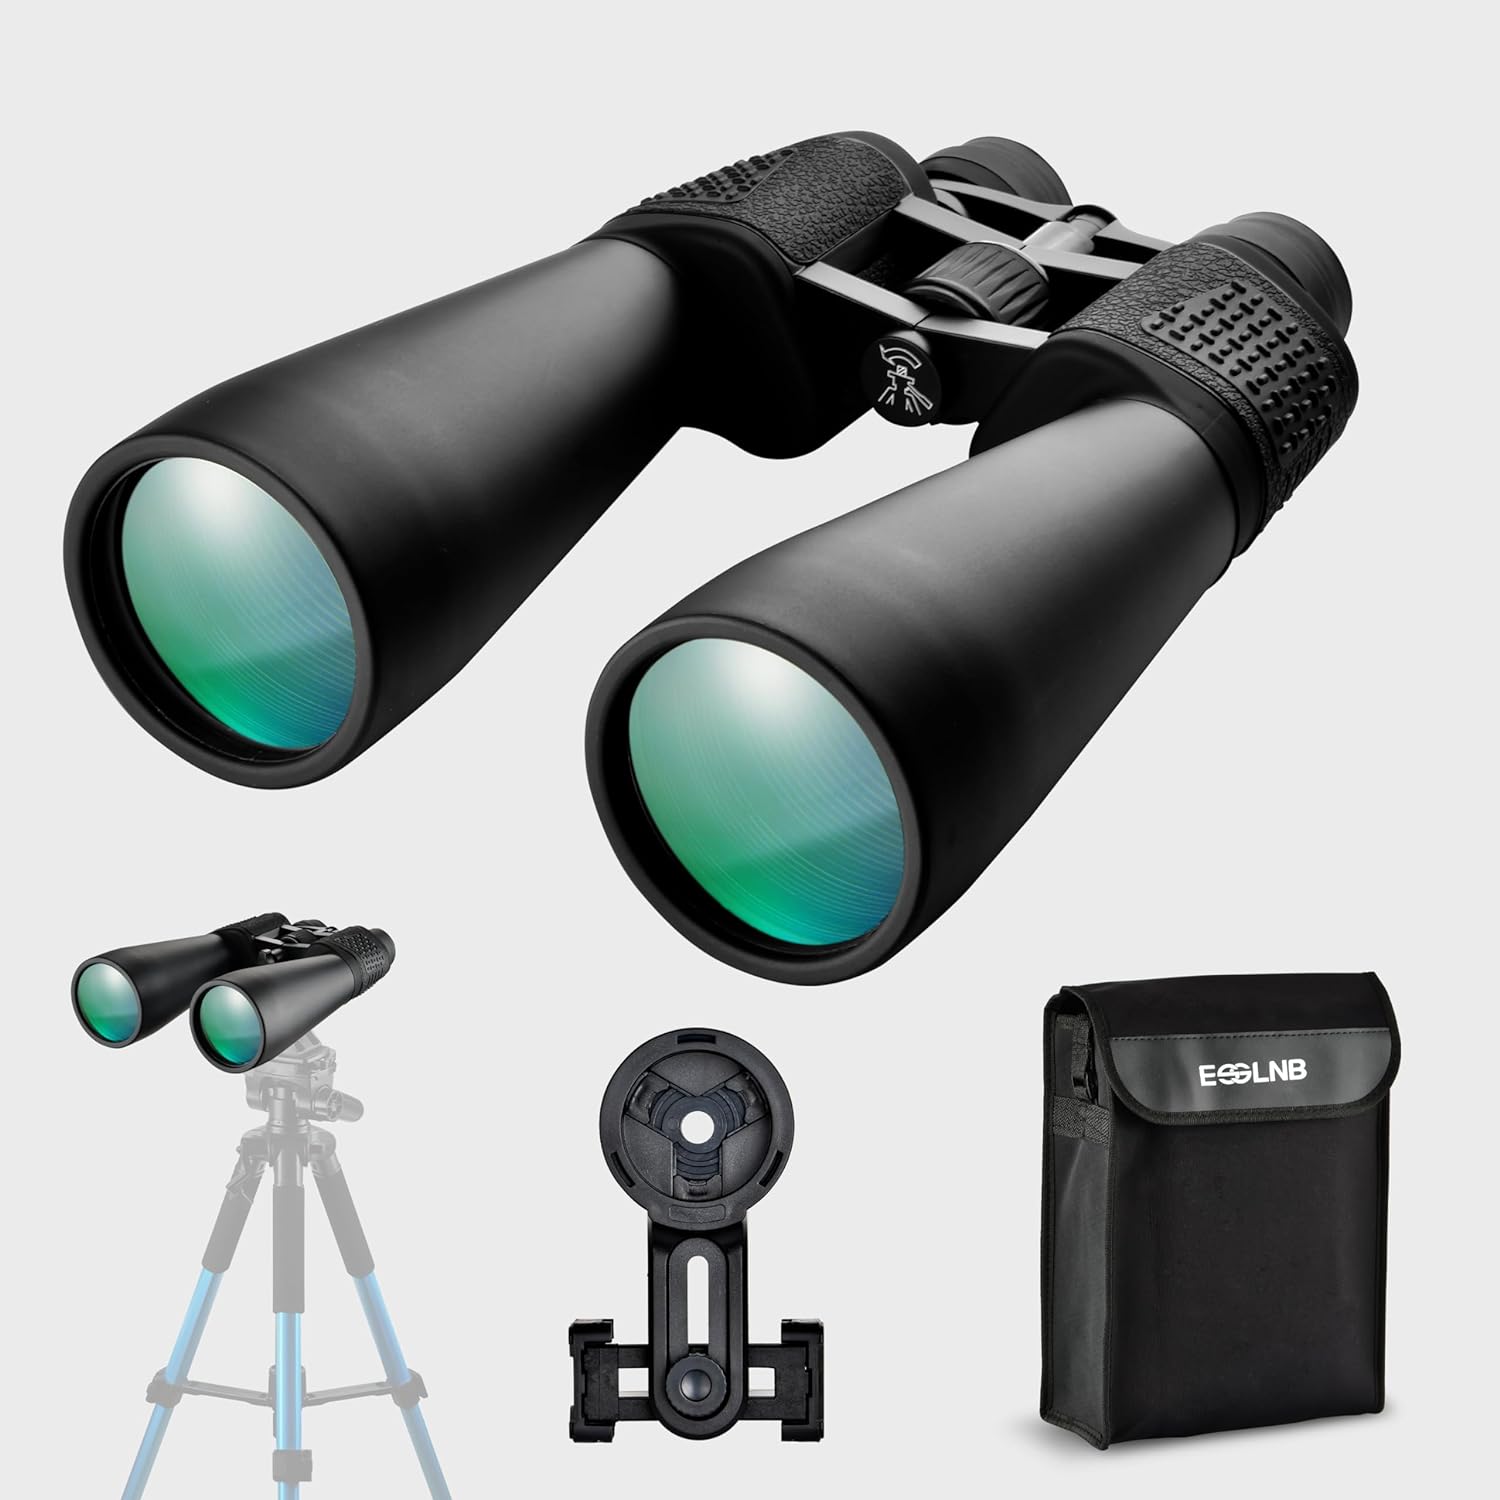 ESSLNB Astronomy Binoculars 13-39X70 Zoom Giant Binoculars with Tripod Adapter Phone Adapter and Case Binoculars for Bird Watching Hunting and Stargazing (13-39X70)